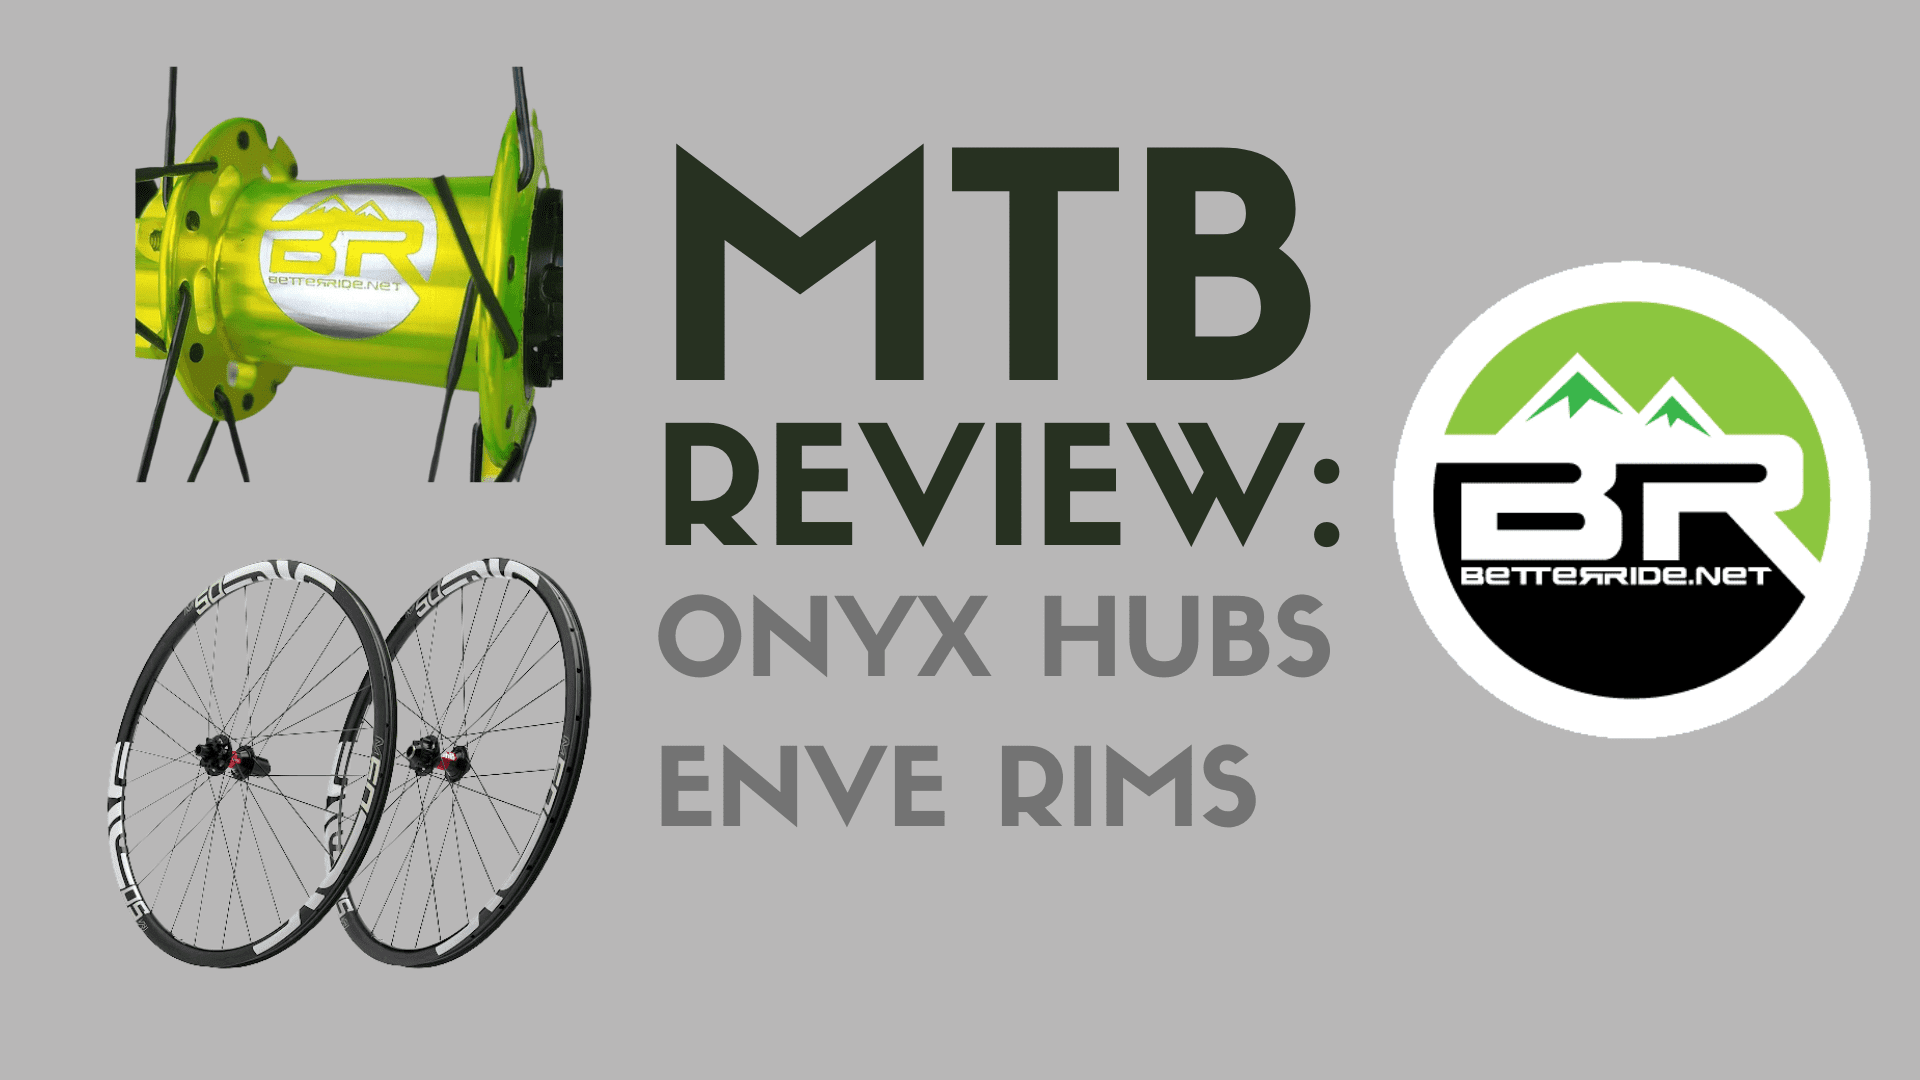 MTB Video Review Onyx Hubs & Enve Rims